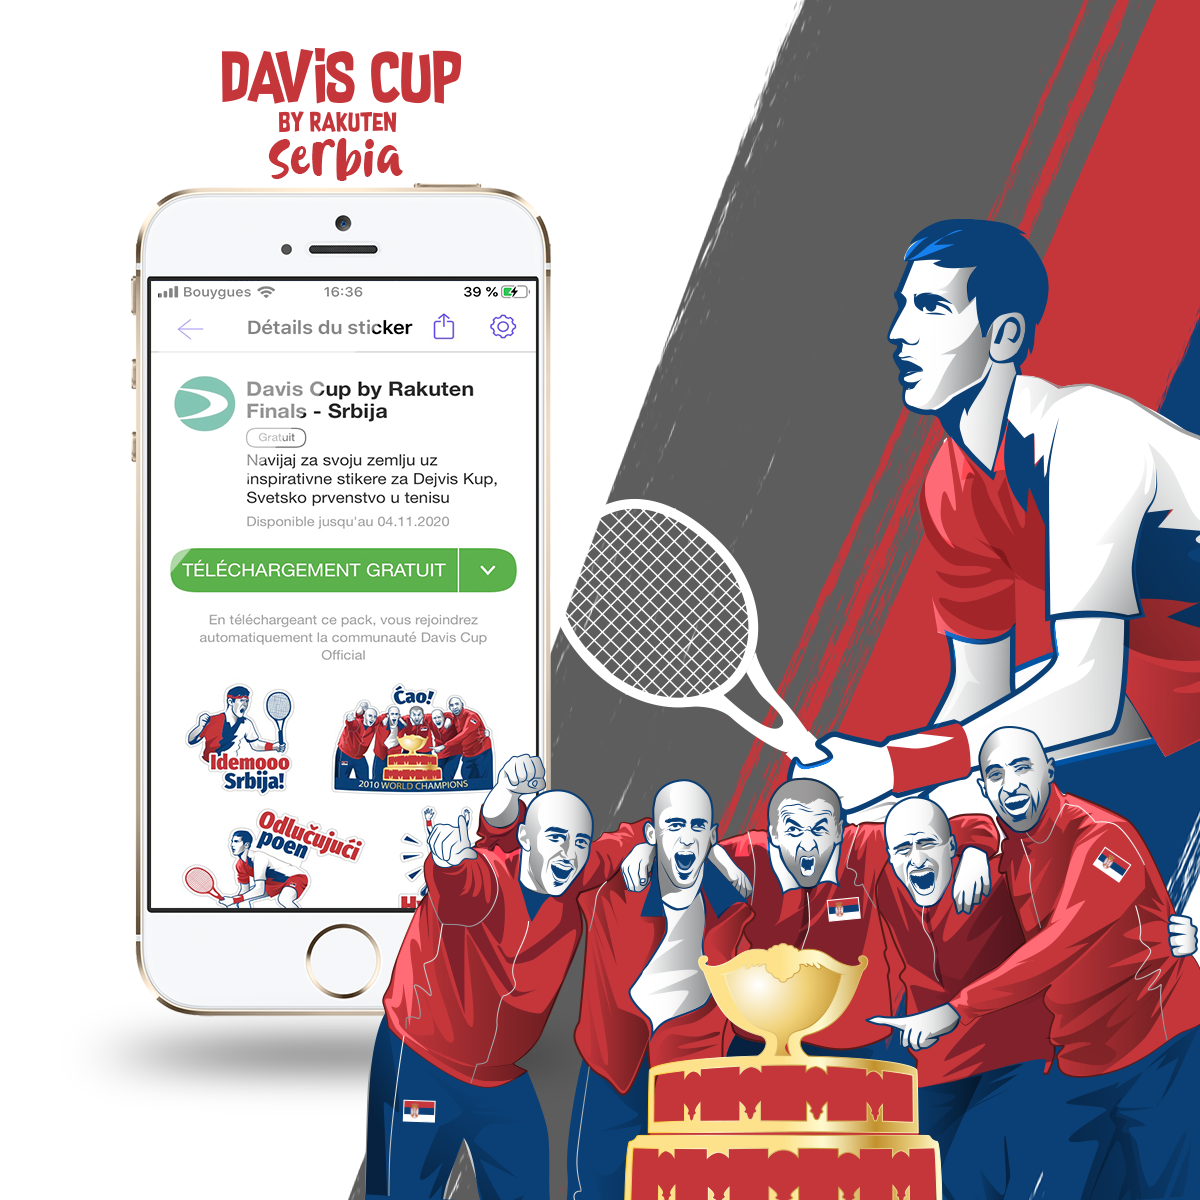 Davis Cup By Rakuten Finals - Serbia